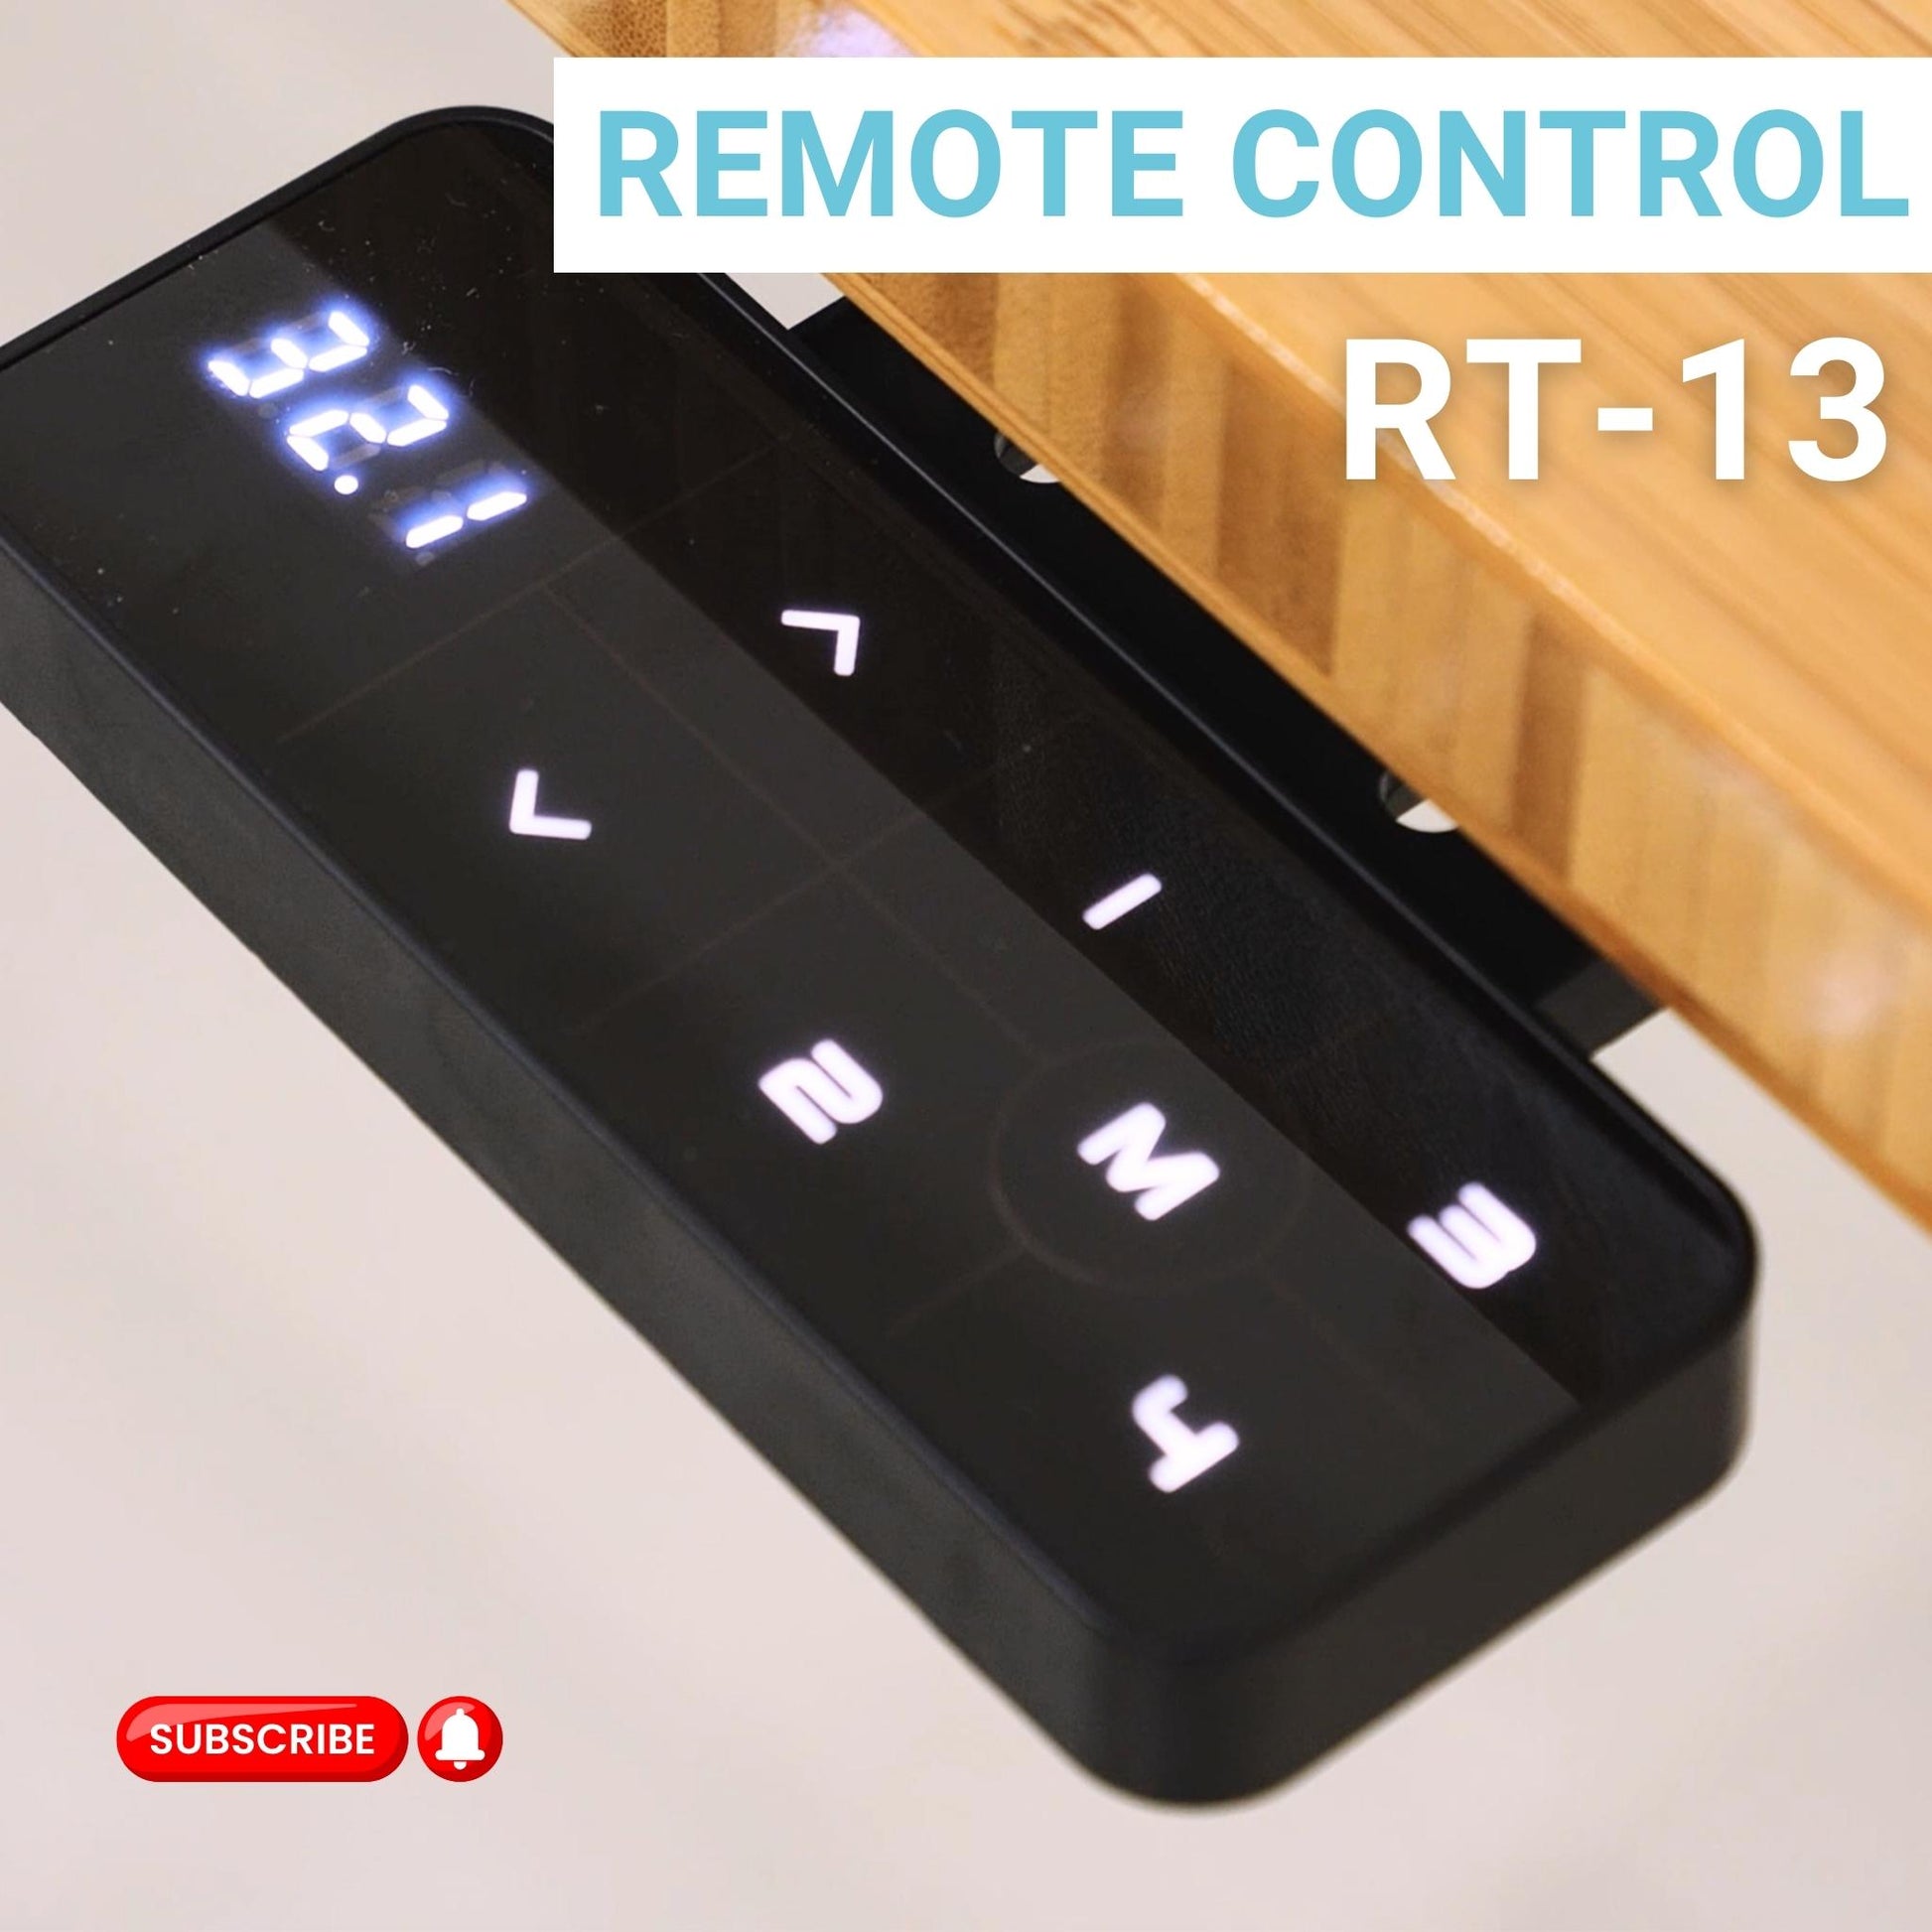 RT-13 Remote